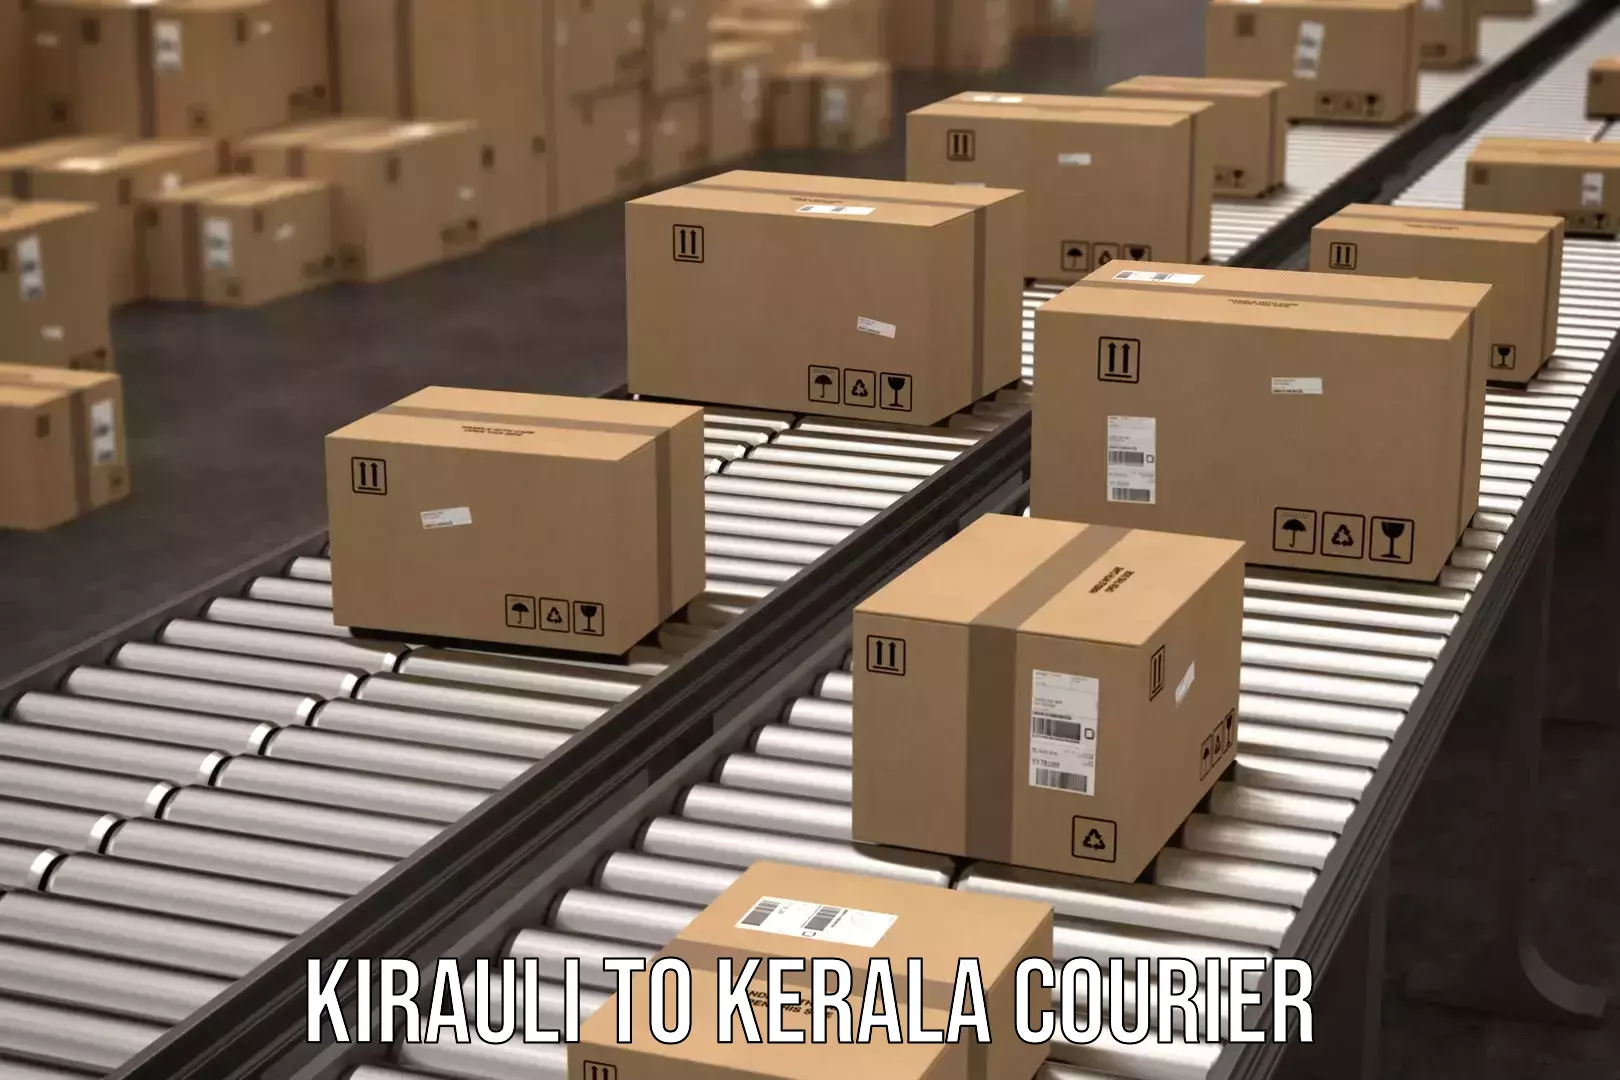 Weekend courier service Kirauli to Palai